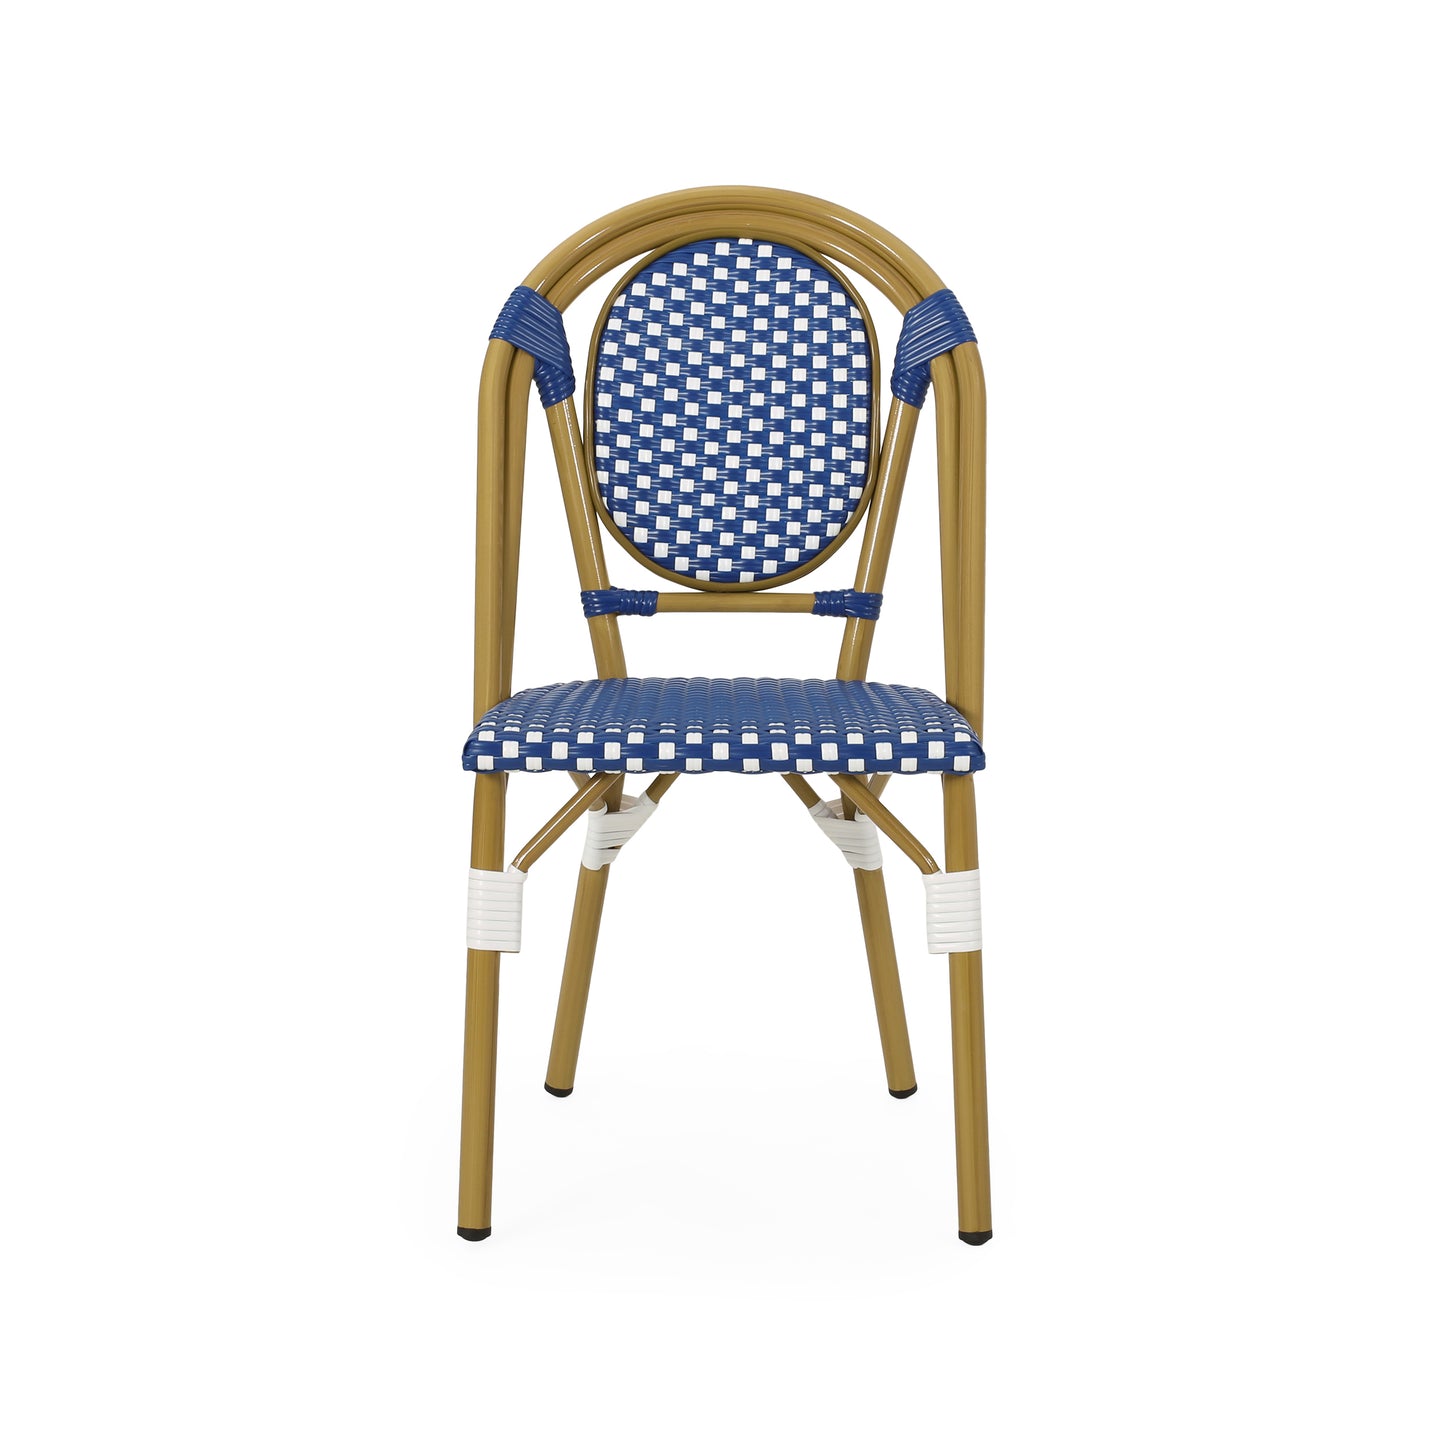 Kazaria Outdoor French Bistro Chairs (Set of 2)